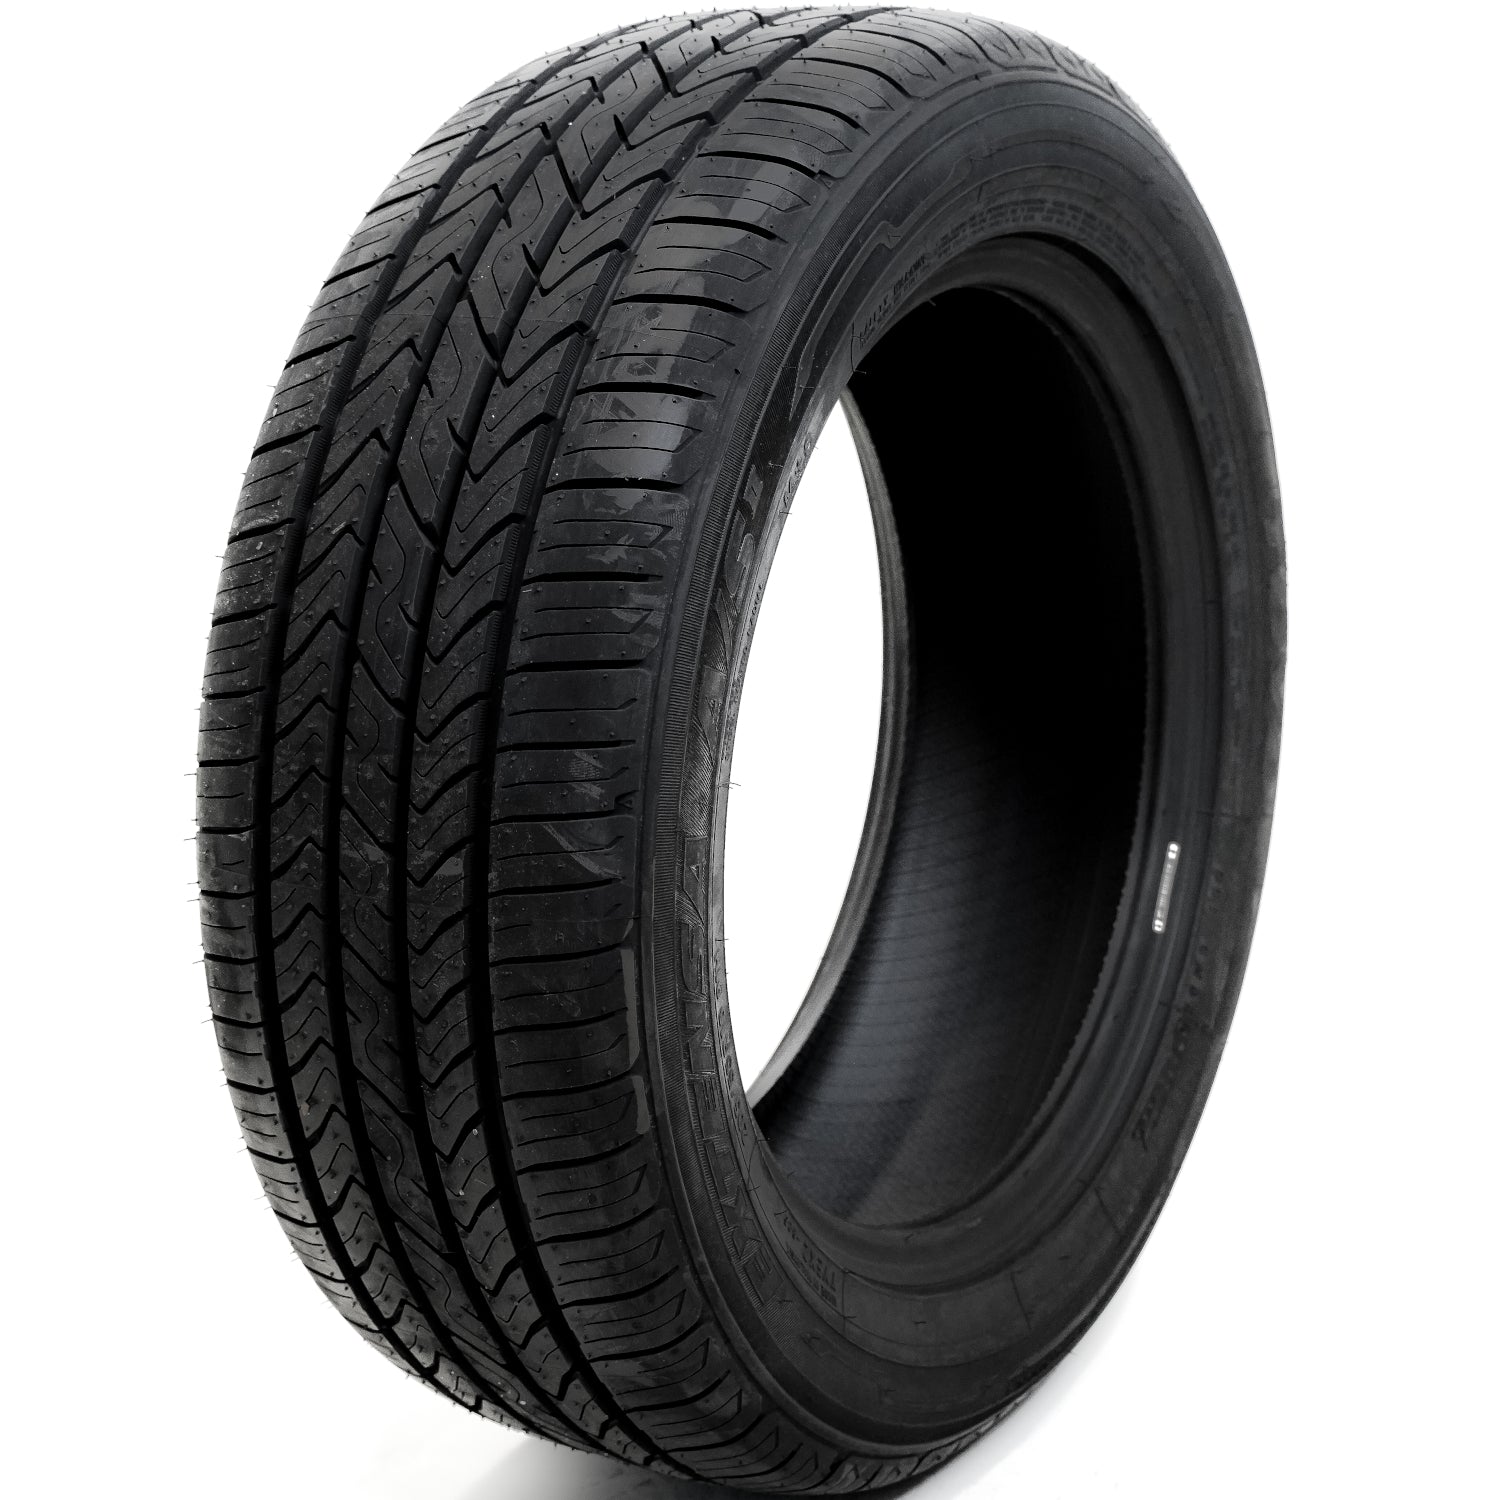 TOYO TIRES EXTENSA A/S II 205/55R16 (24.9X8.1R 16) Tires